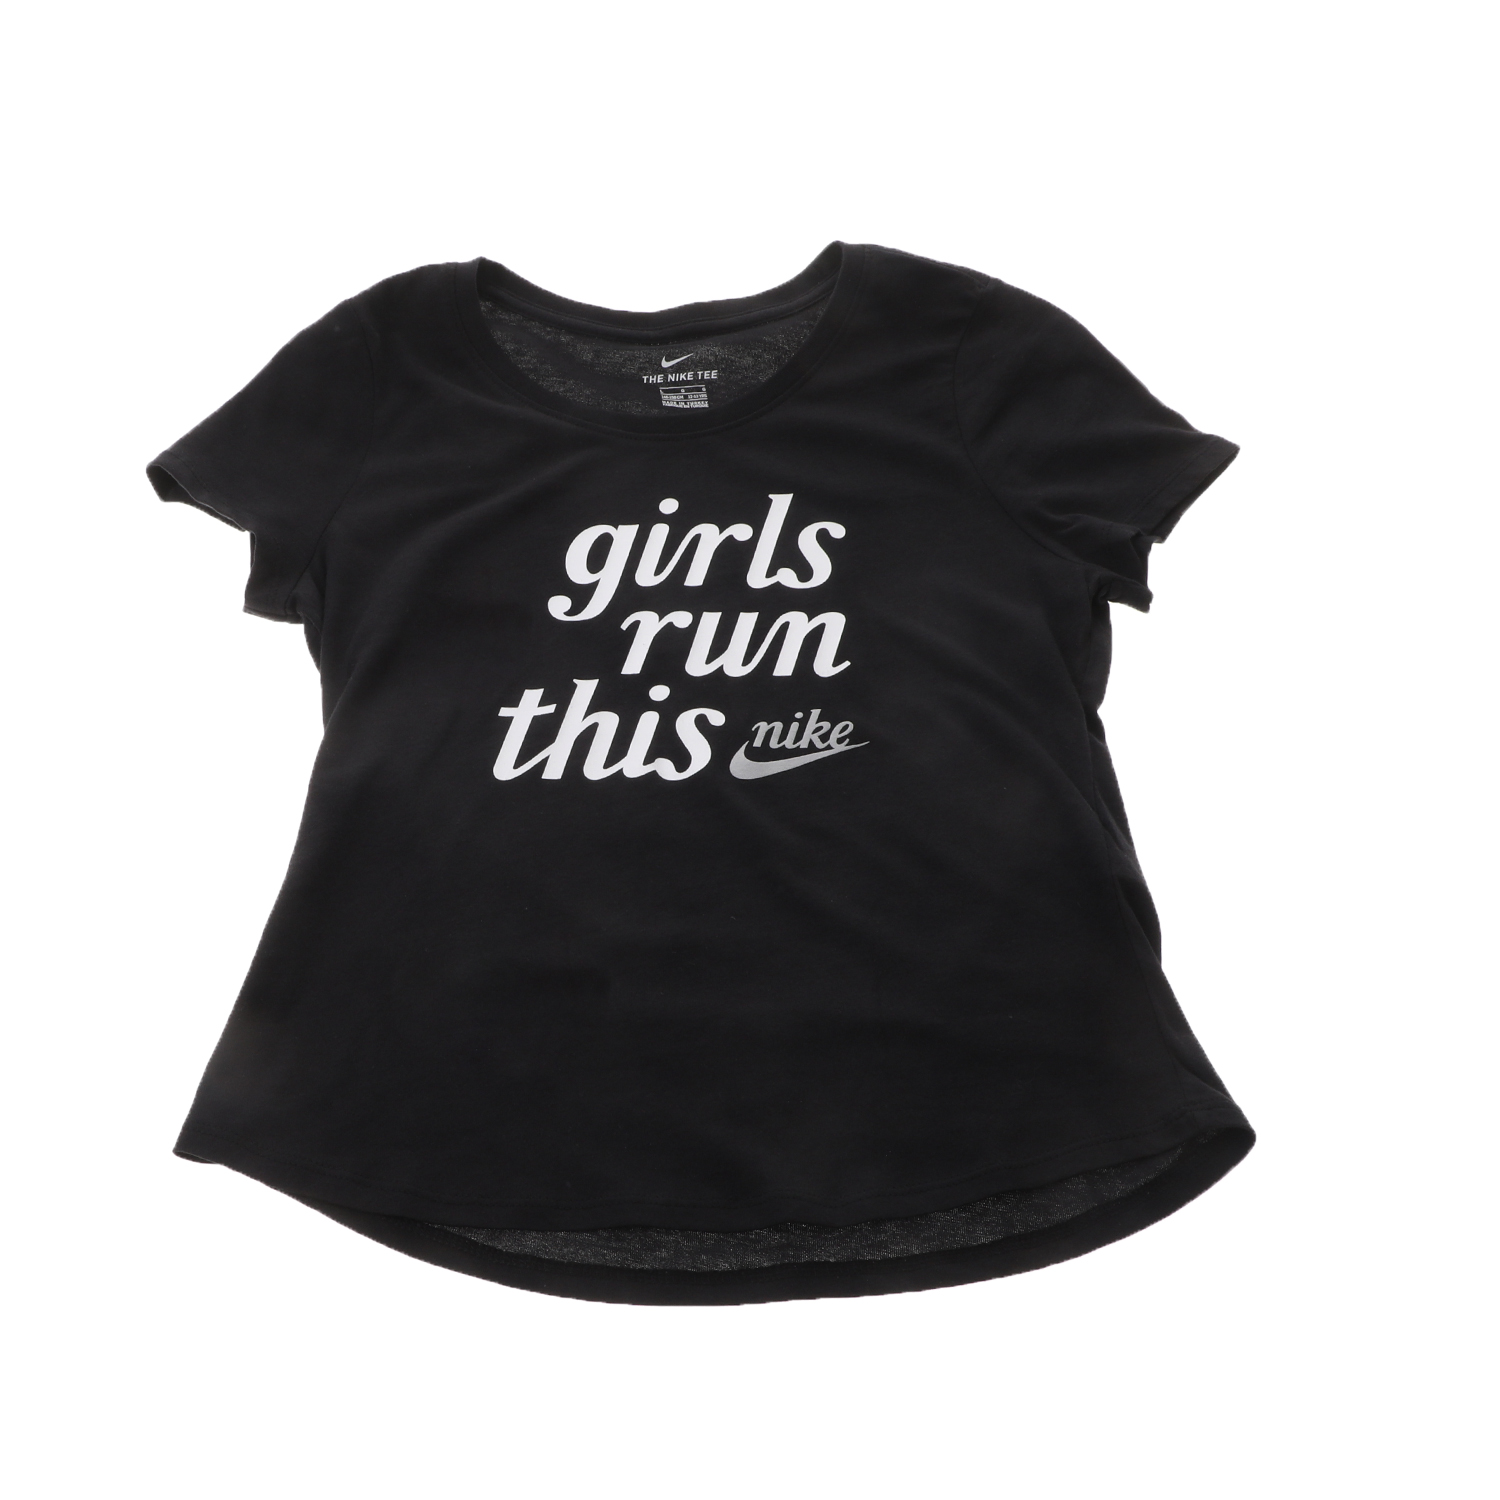 NIKE - Παιδικό t-shirt NIKE NSW TEE SCOOP GIRLS RUN THIS μαύρο Παιδικά/Girls/Ρούχα/Αθλητικά